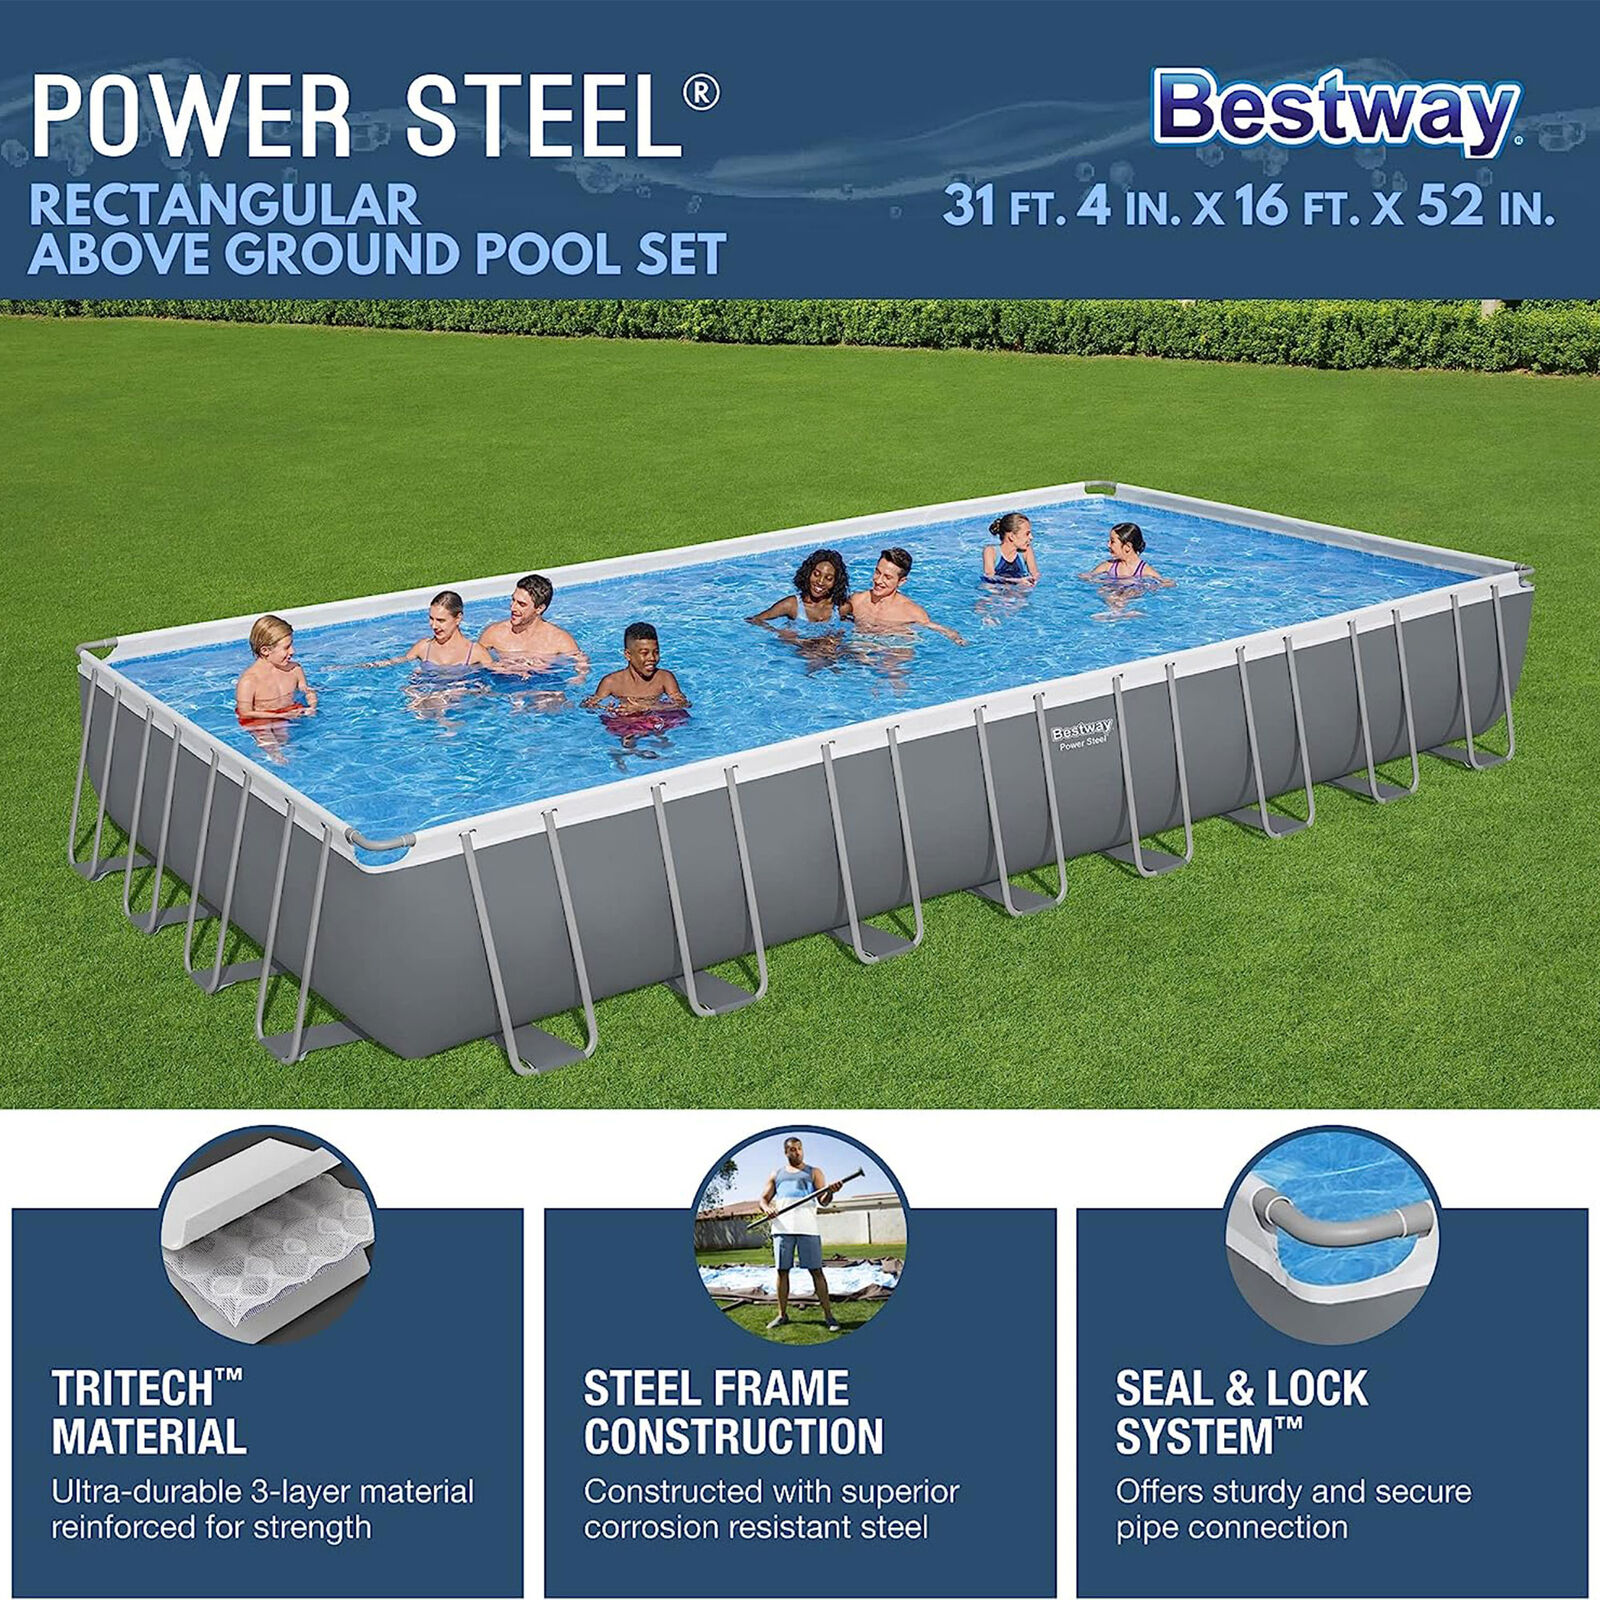 Bestway Power Steel 31'4" x 16' x 52" Rectangular Above Ground Swimming Pool Set